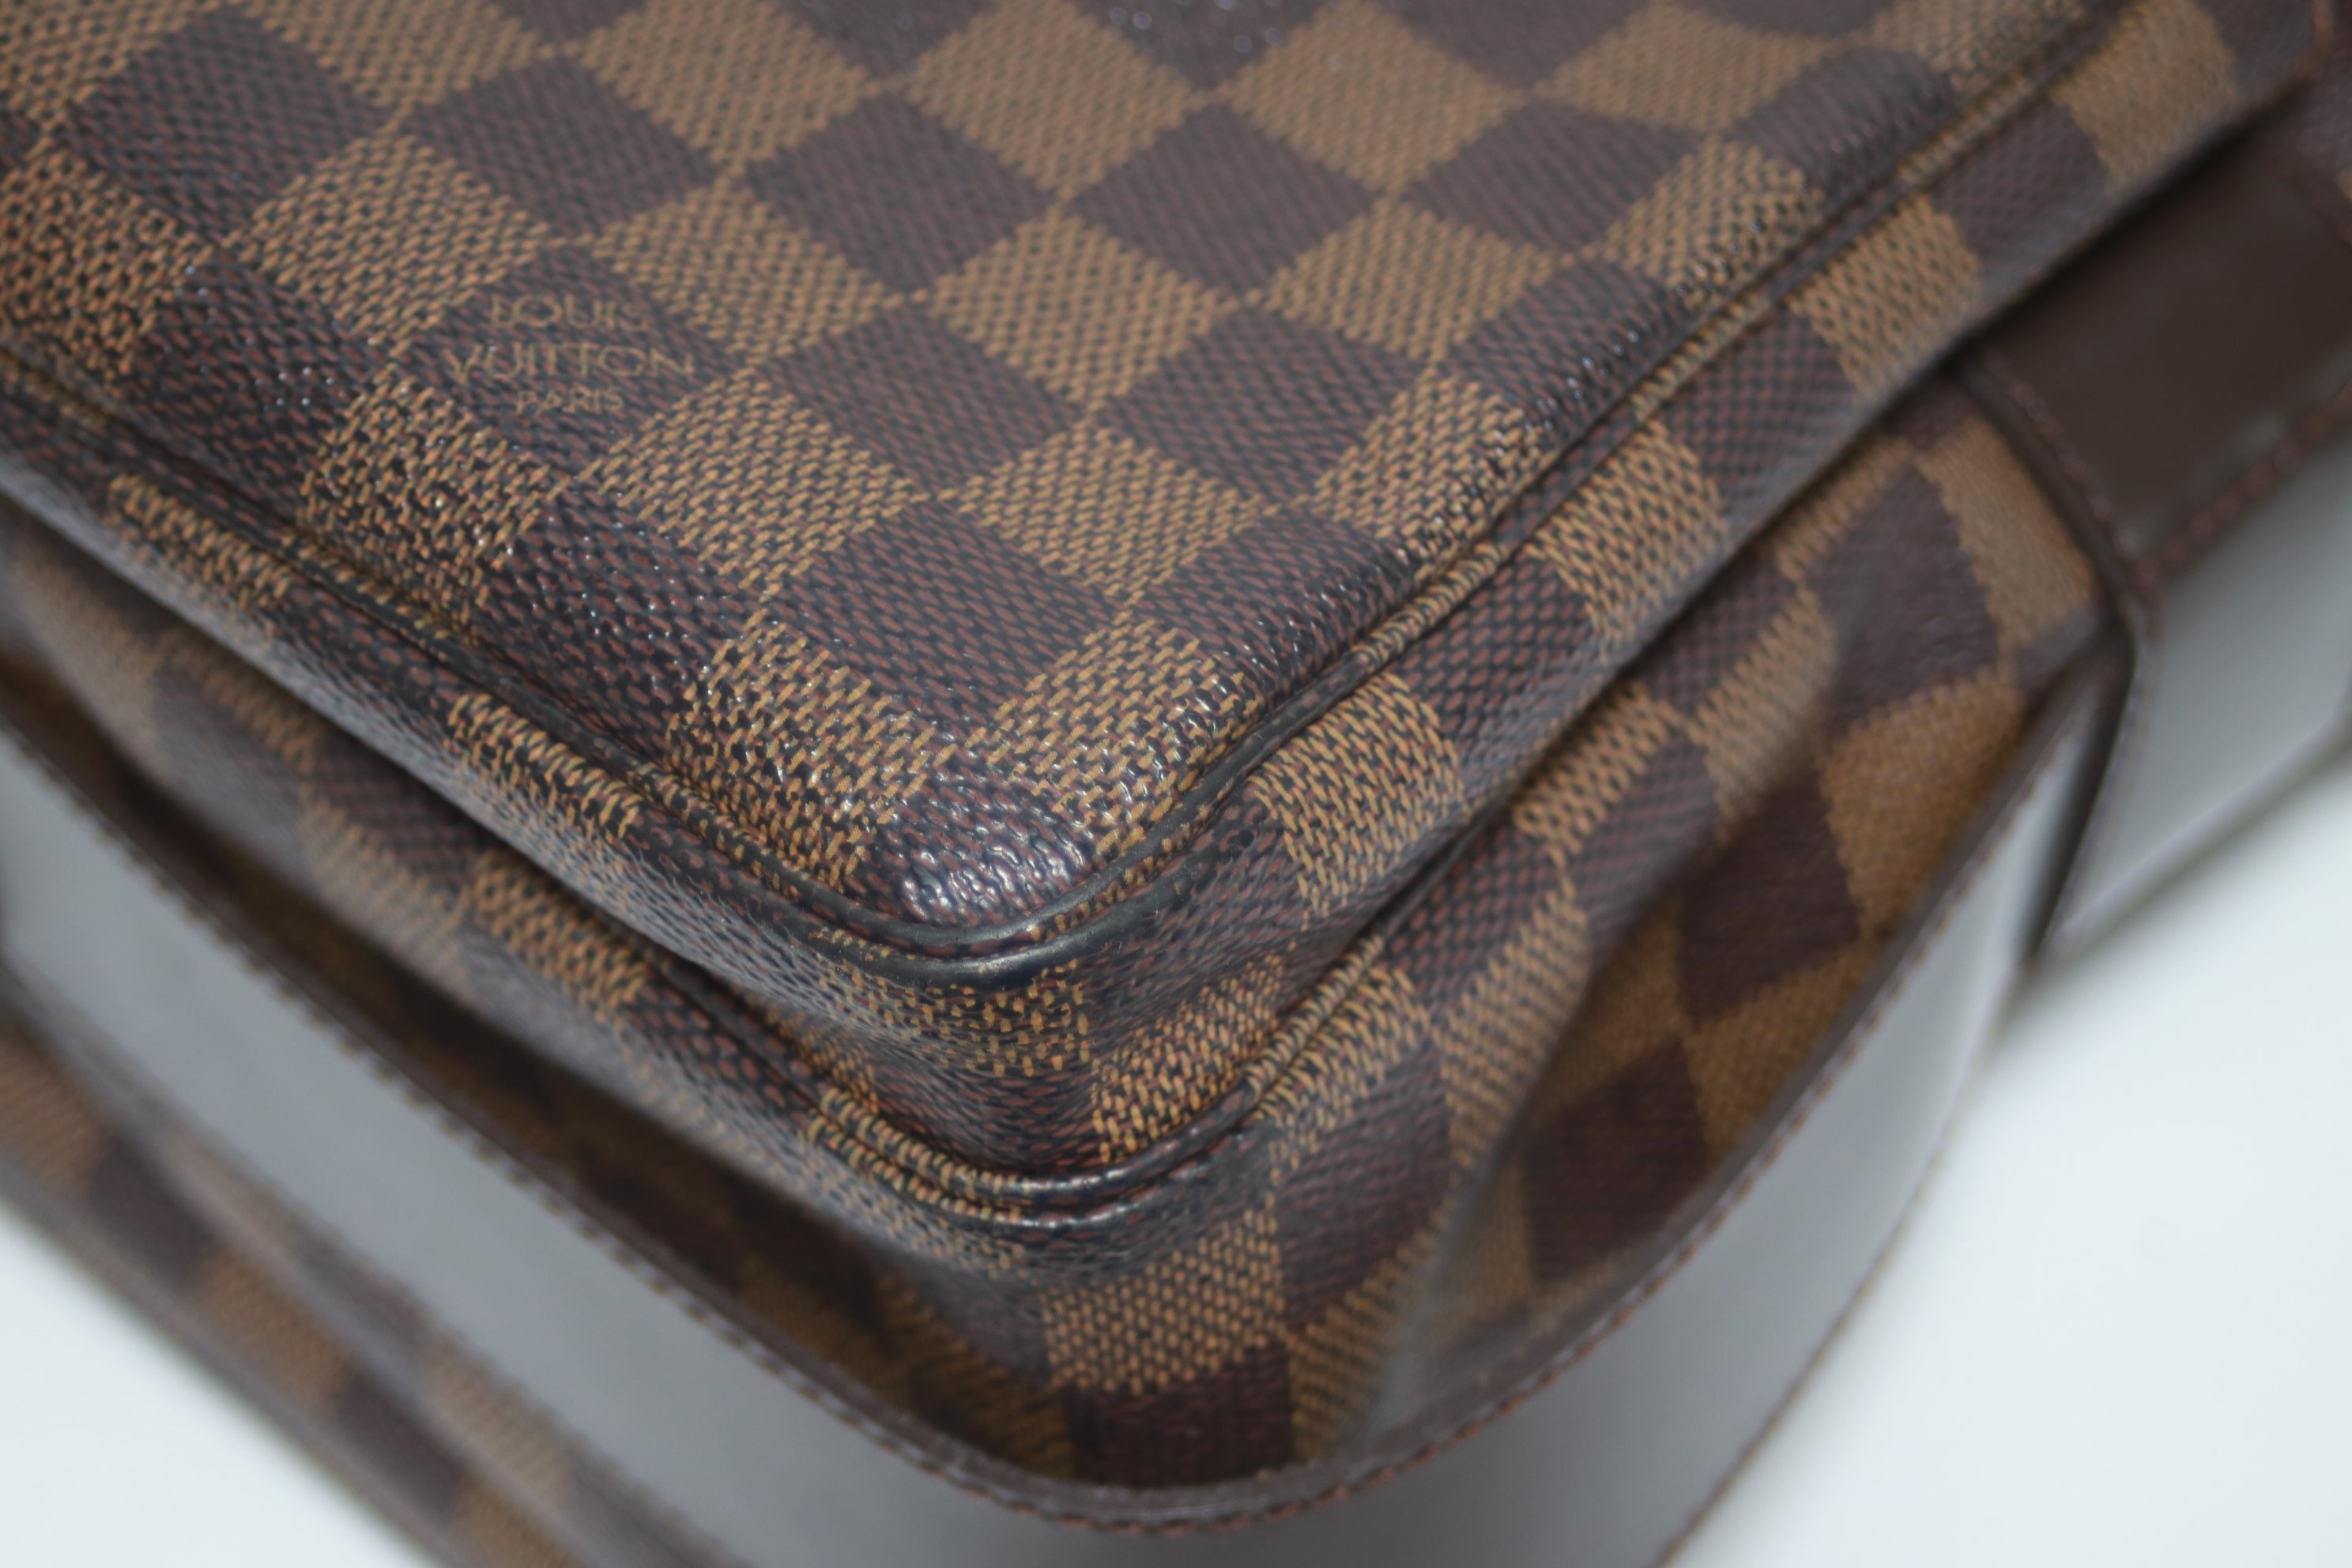 Louis Vuitton Naviglio Damier Ebene Messenger Bag Used (7355)